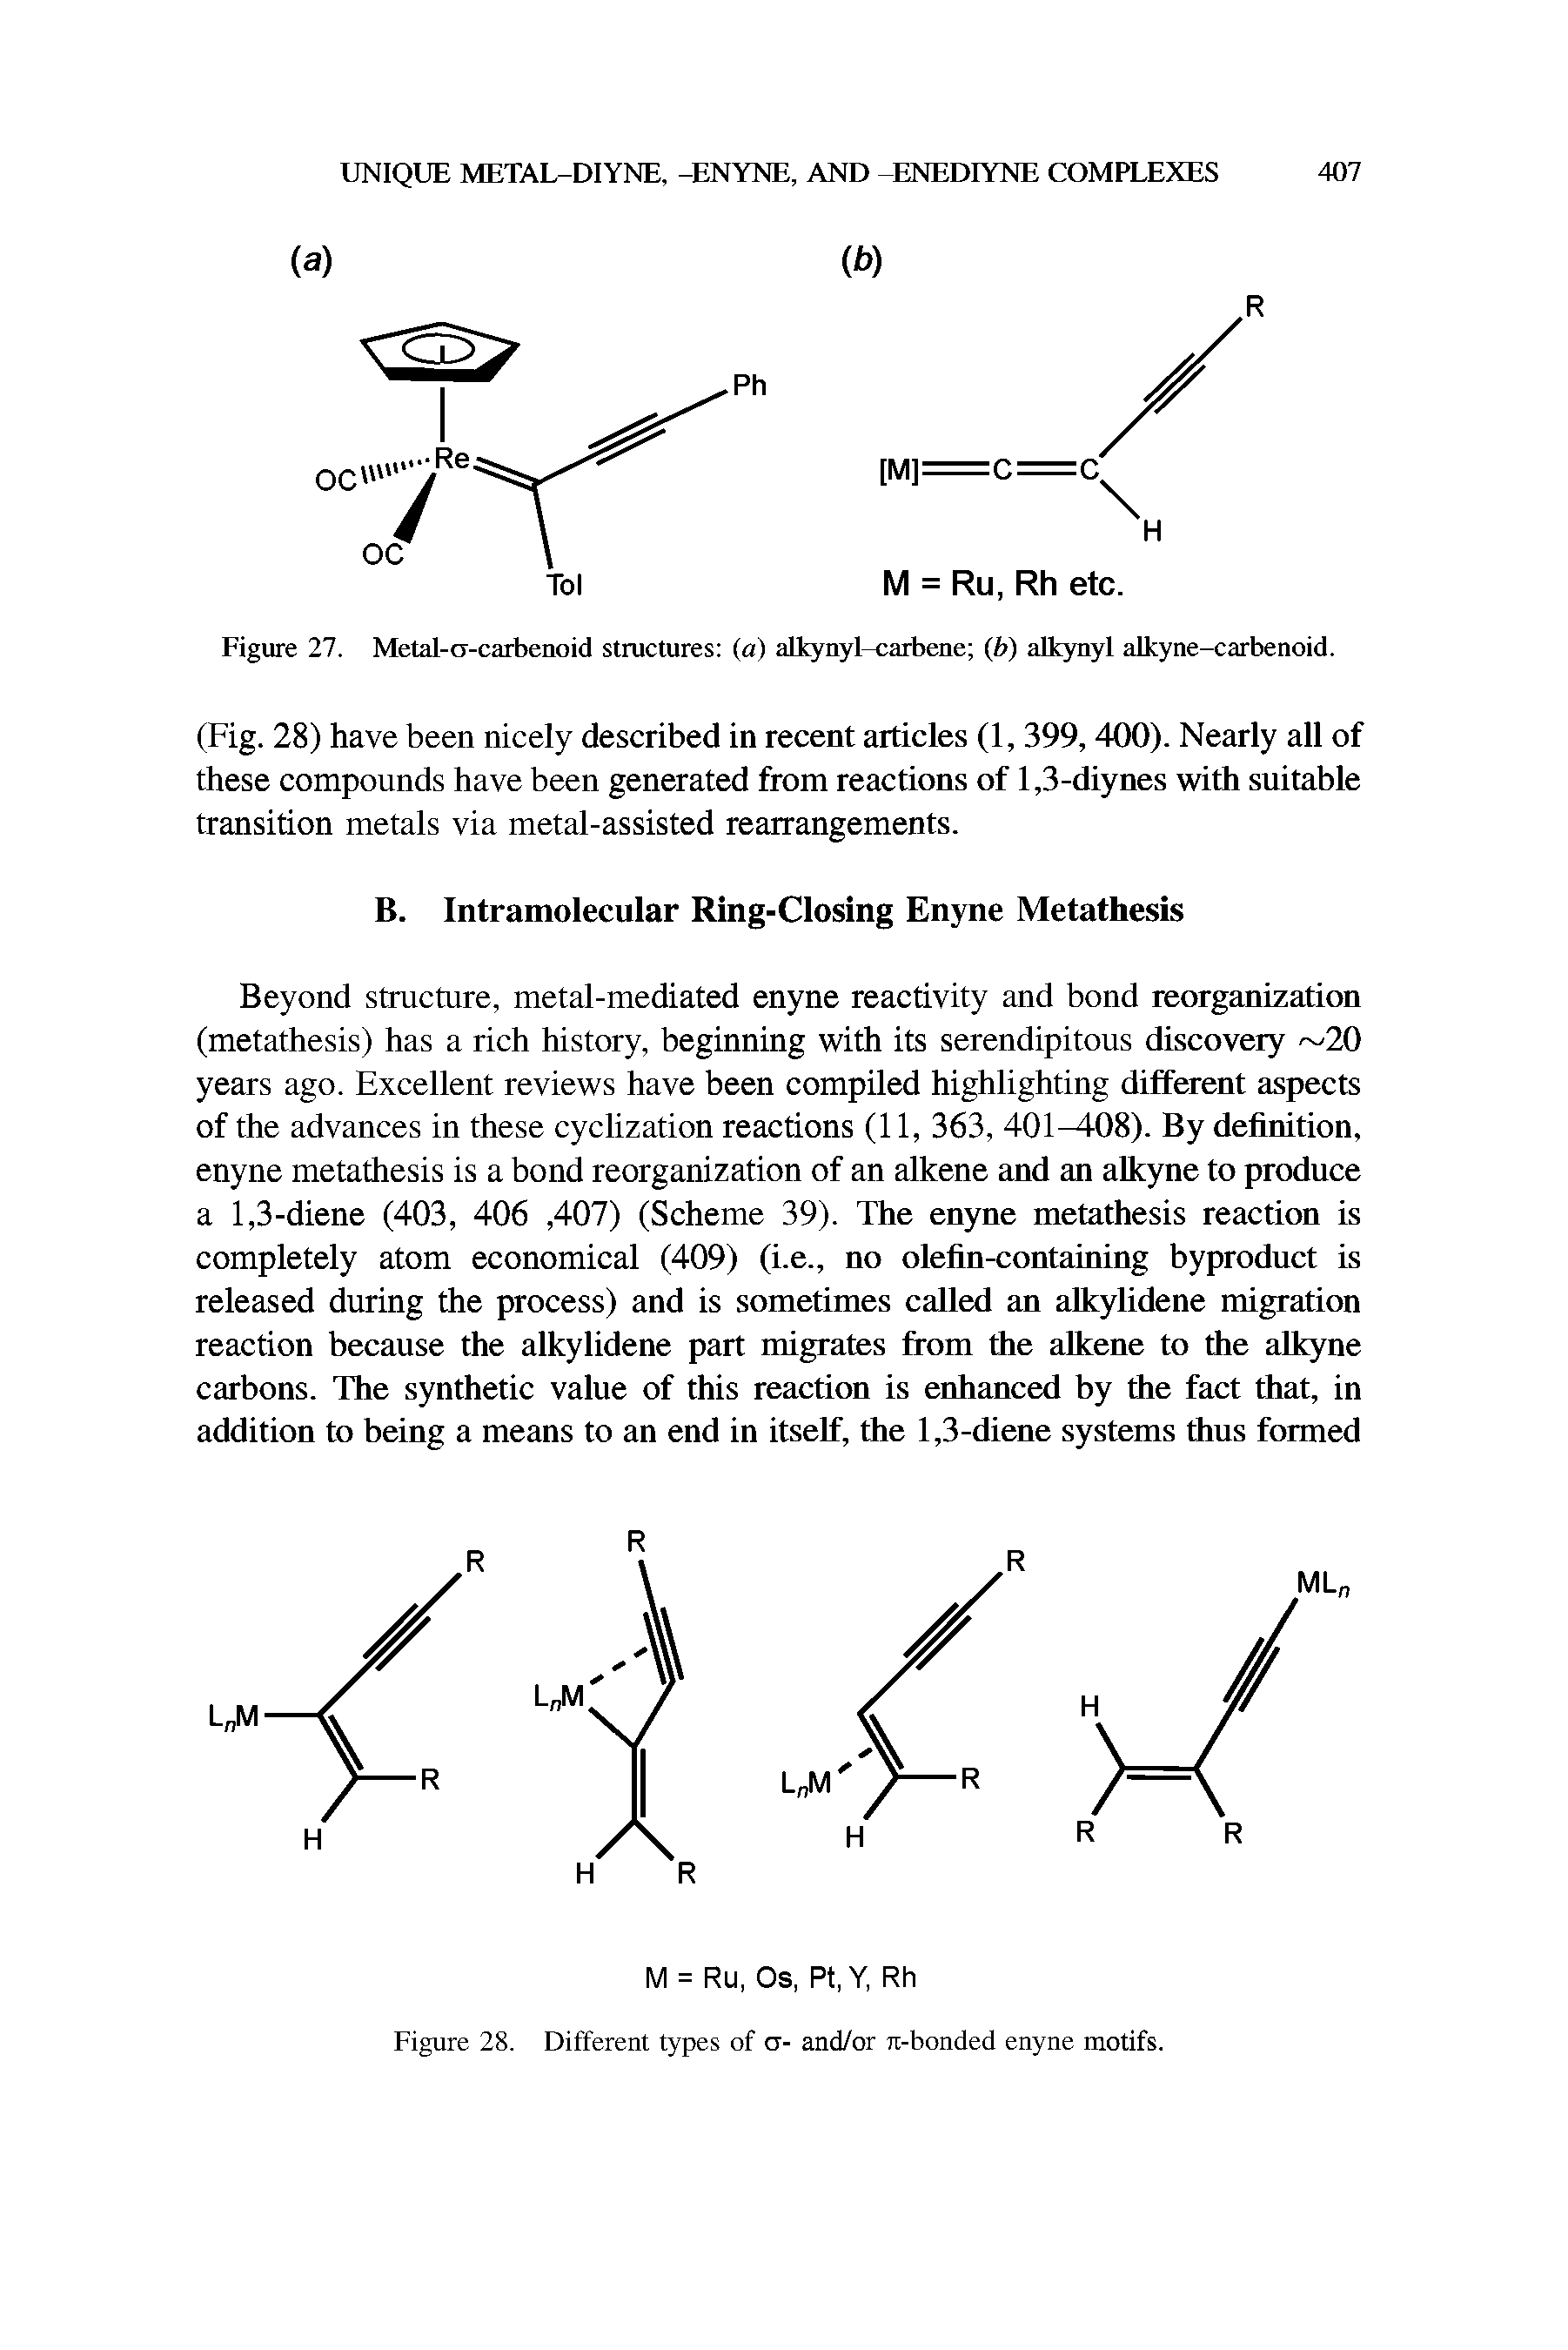 Figure 27. Metal-a-carbenoid structures (a) alkynyl-carbene (b) alkynyl aUcyne-carbenoid.